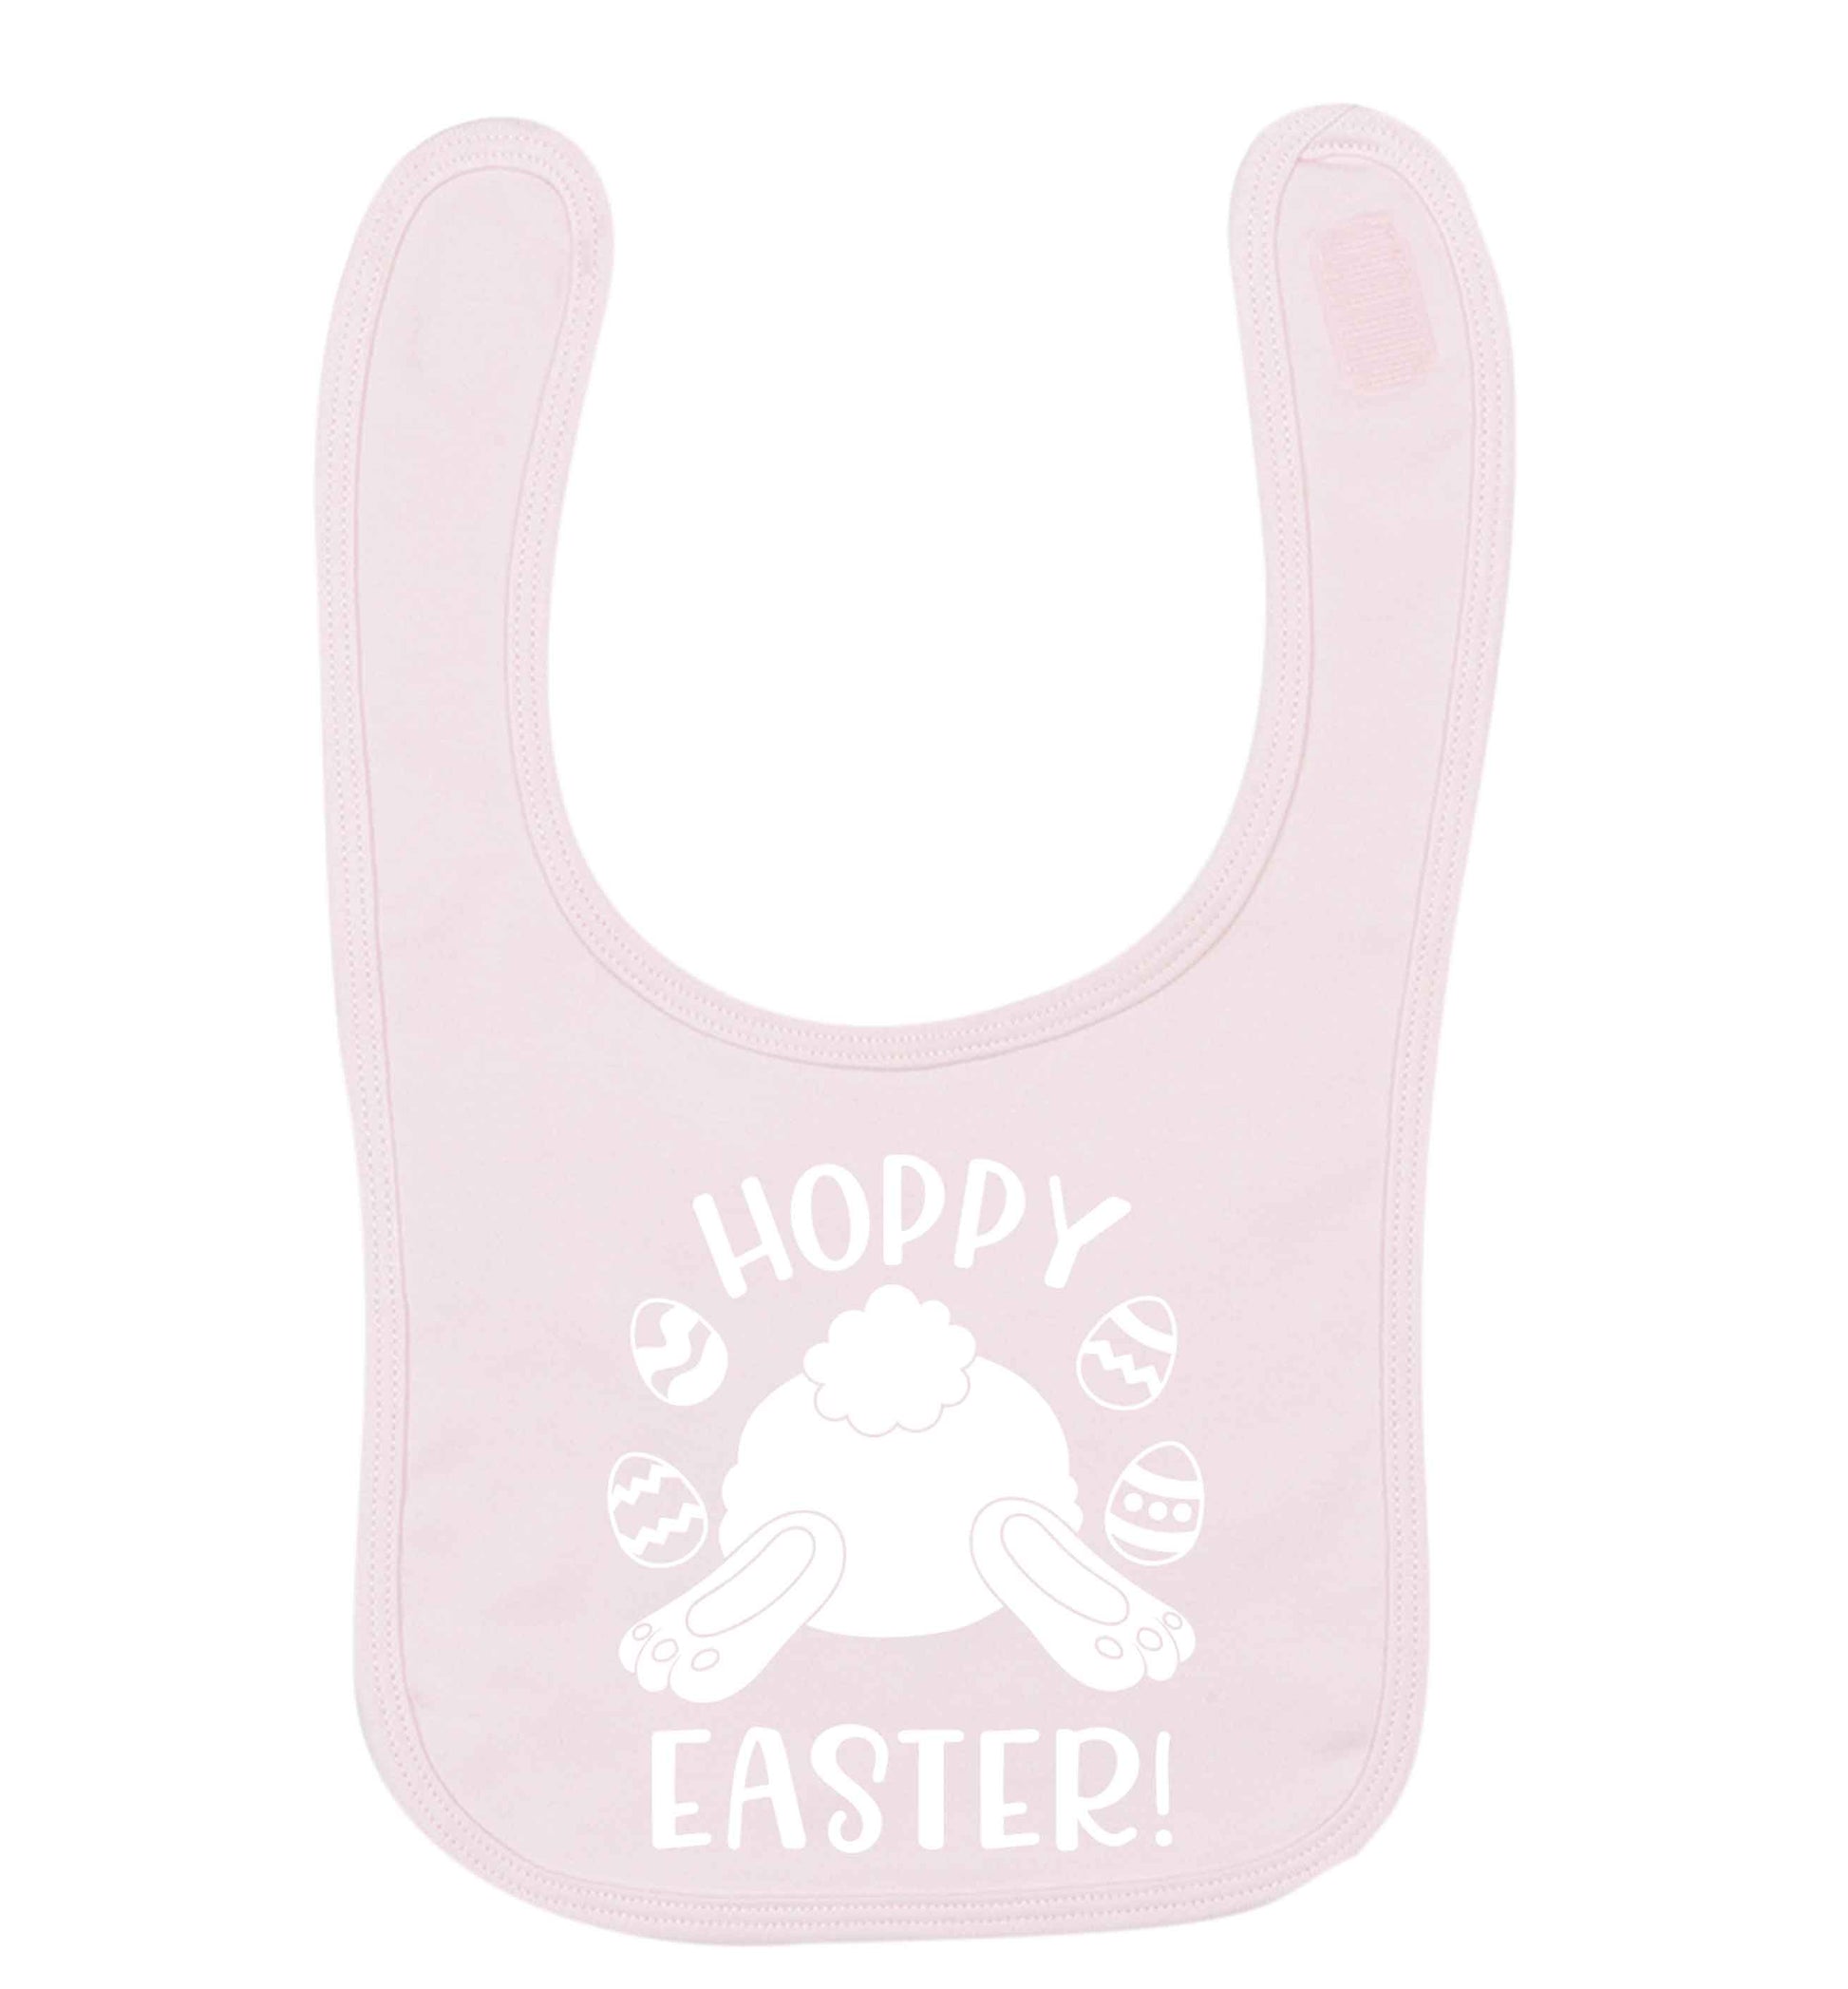 Hoppy Easter pale pink baby bib